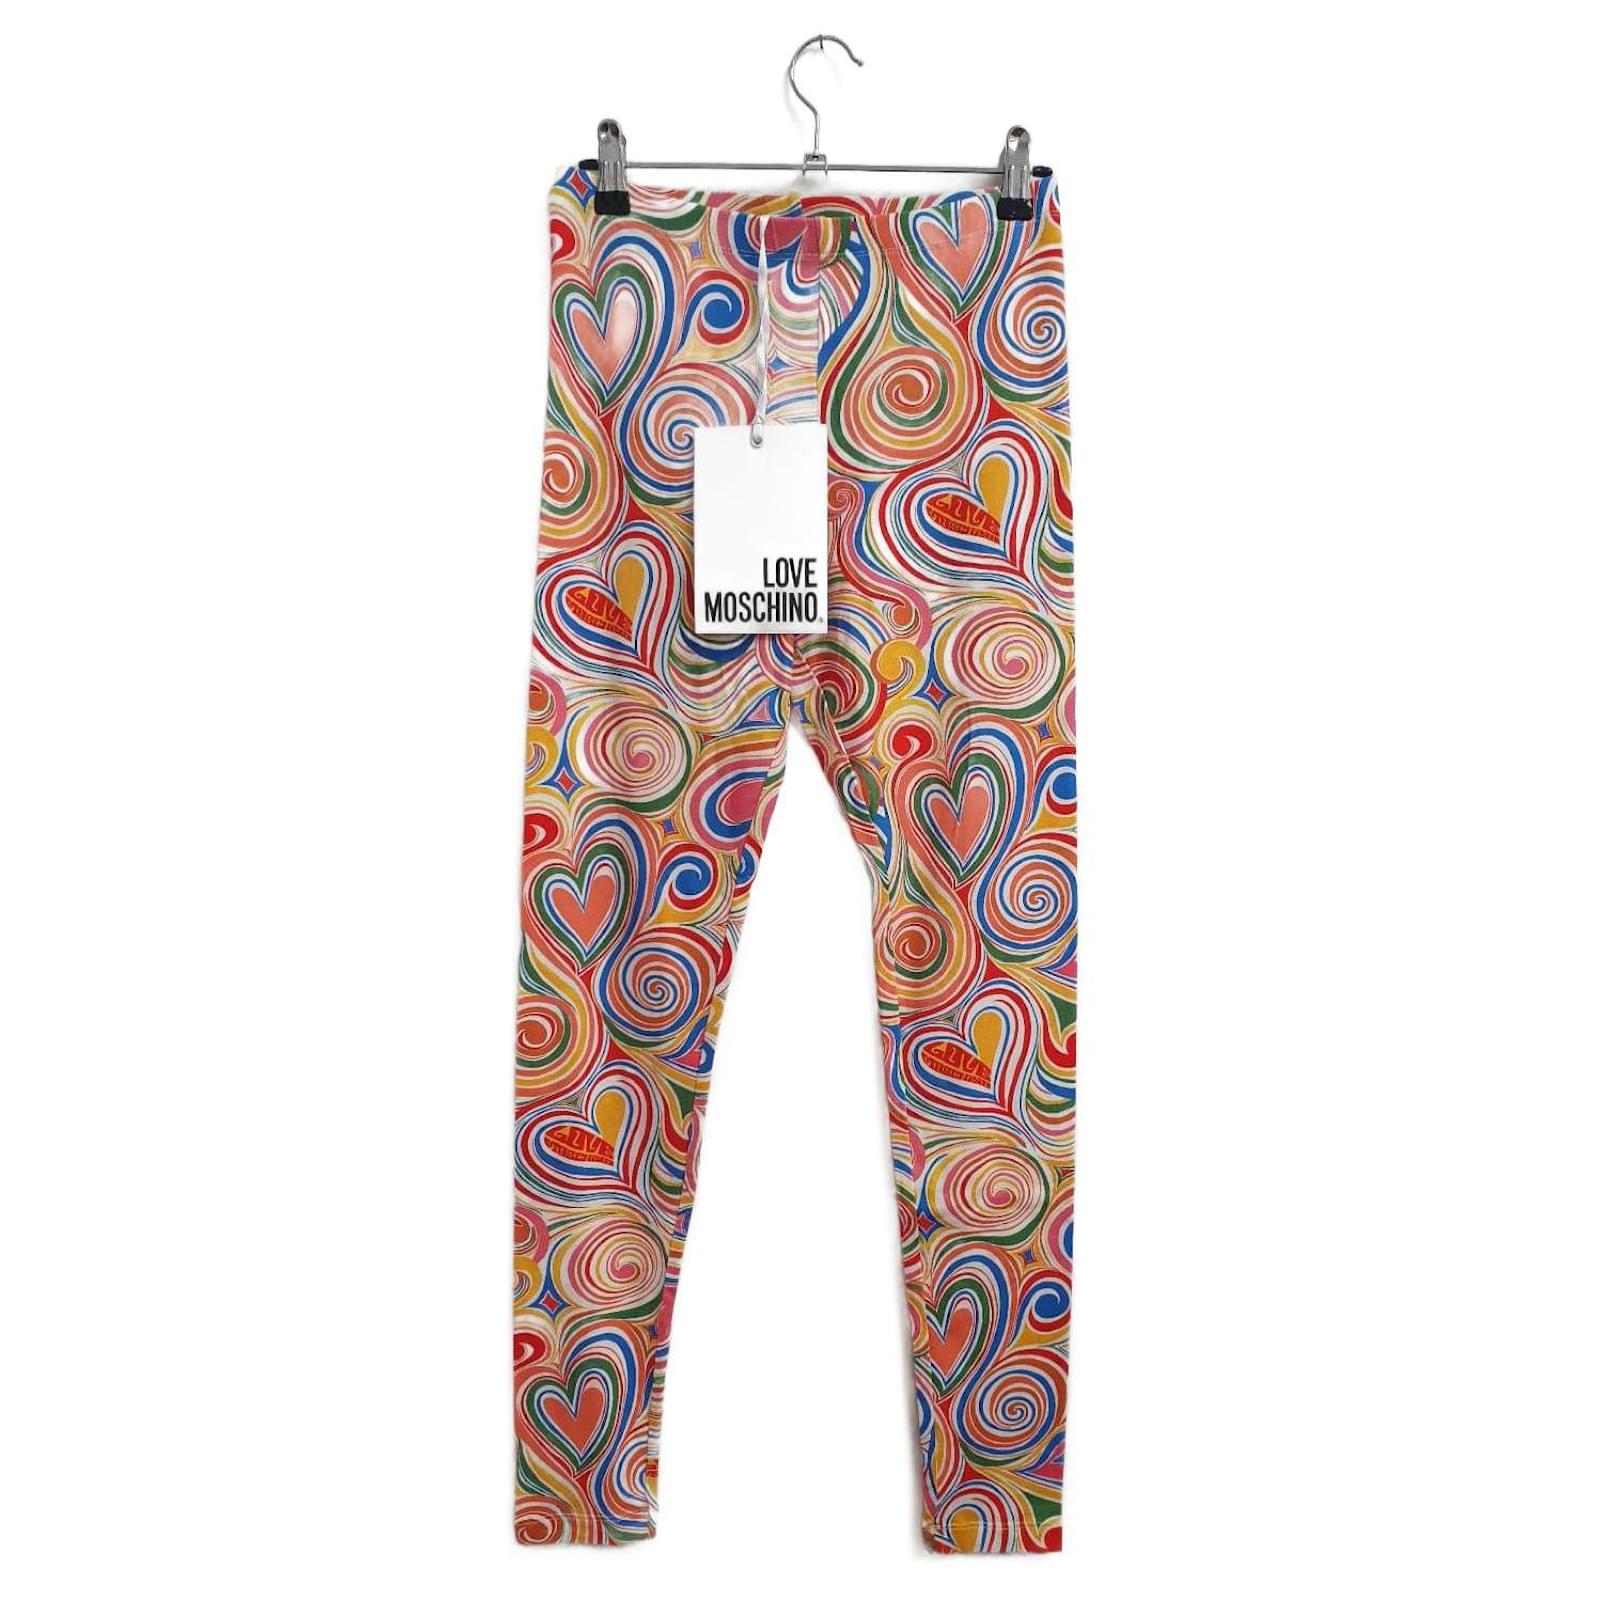 https://cdn1.jolicloset.com/imgr/full/2023/07/947302-1/love-moschino-multiple-colors-cotton-pants-leggings.jpg